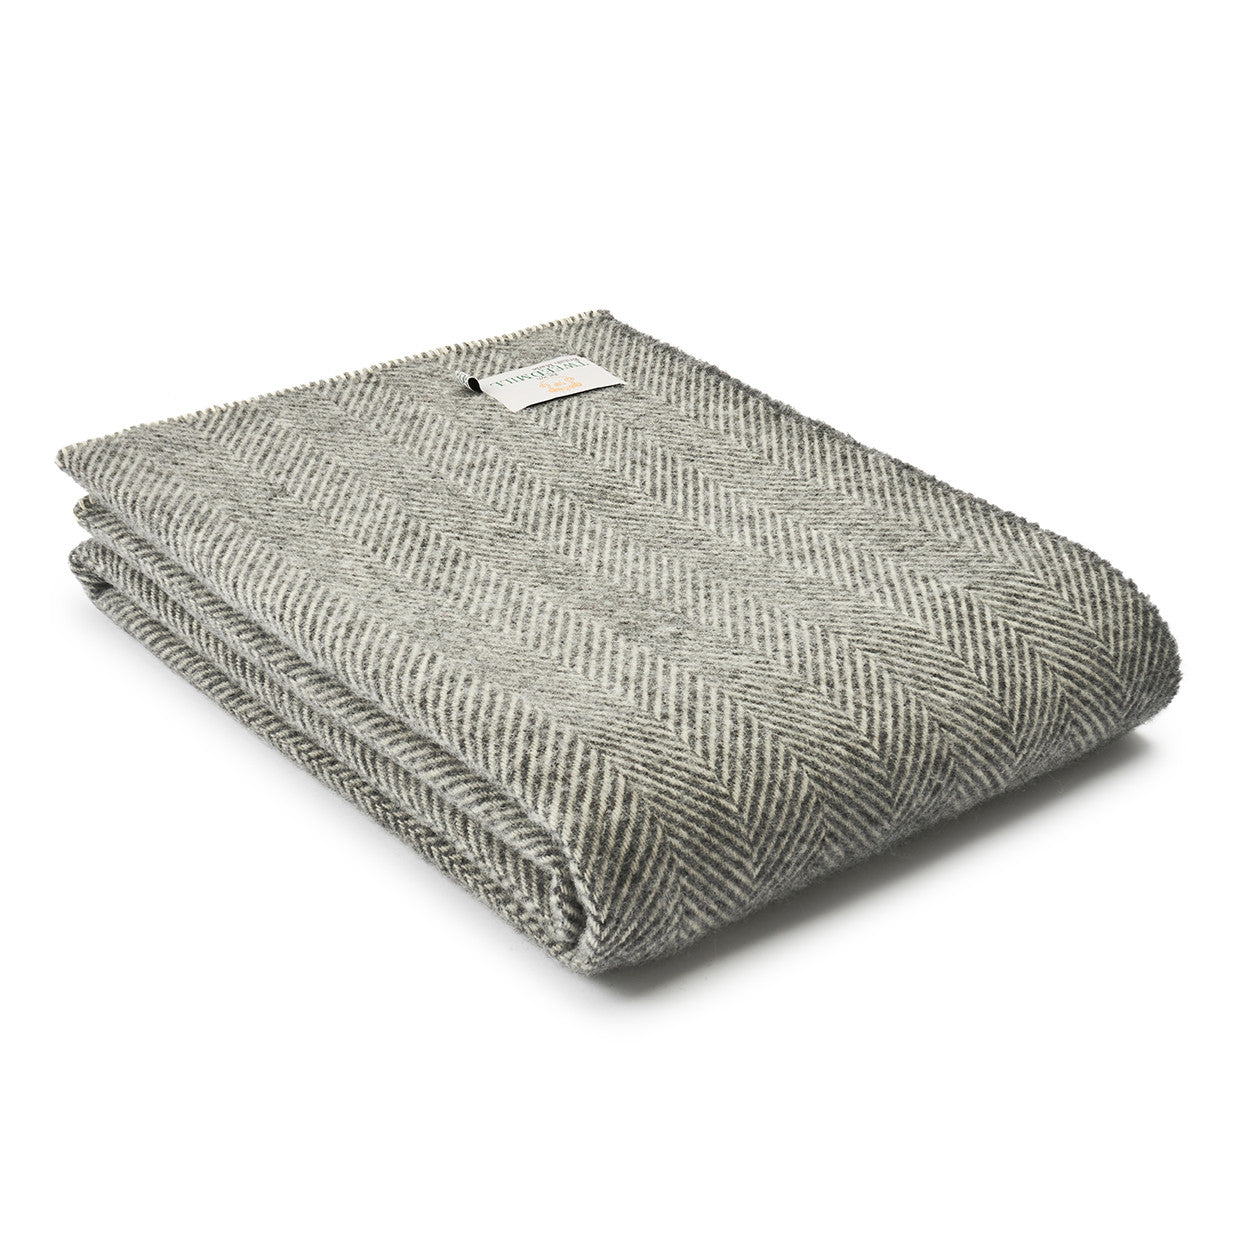 Wool throw - Fishbone with blanket stitch Slate